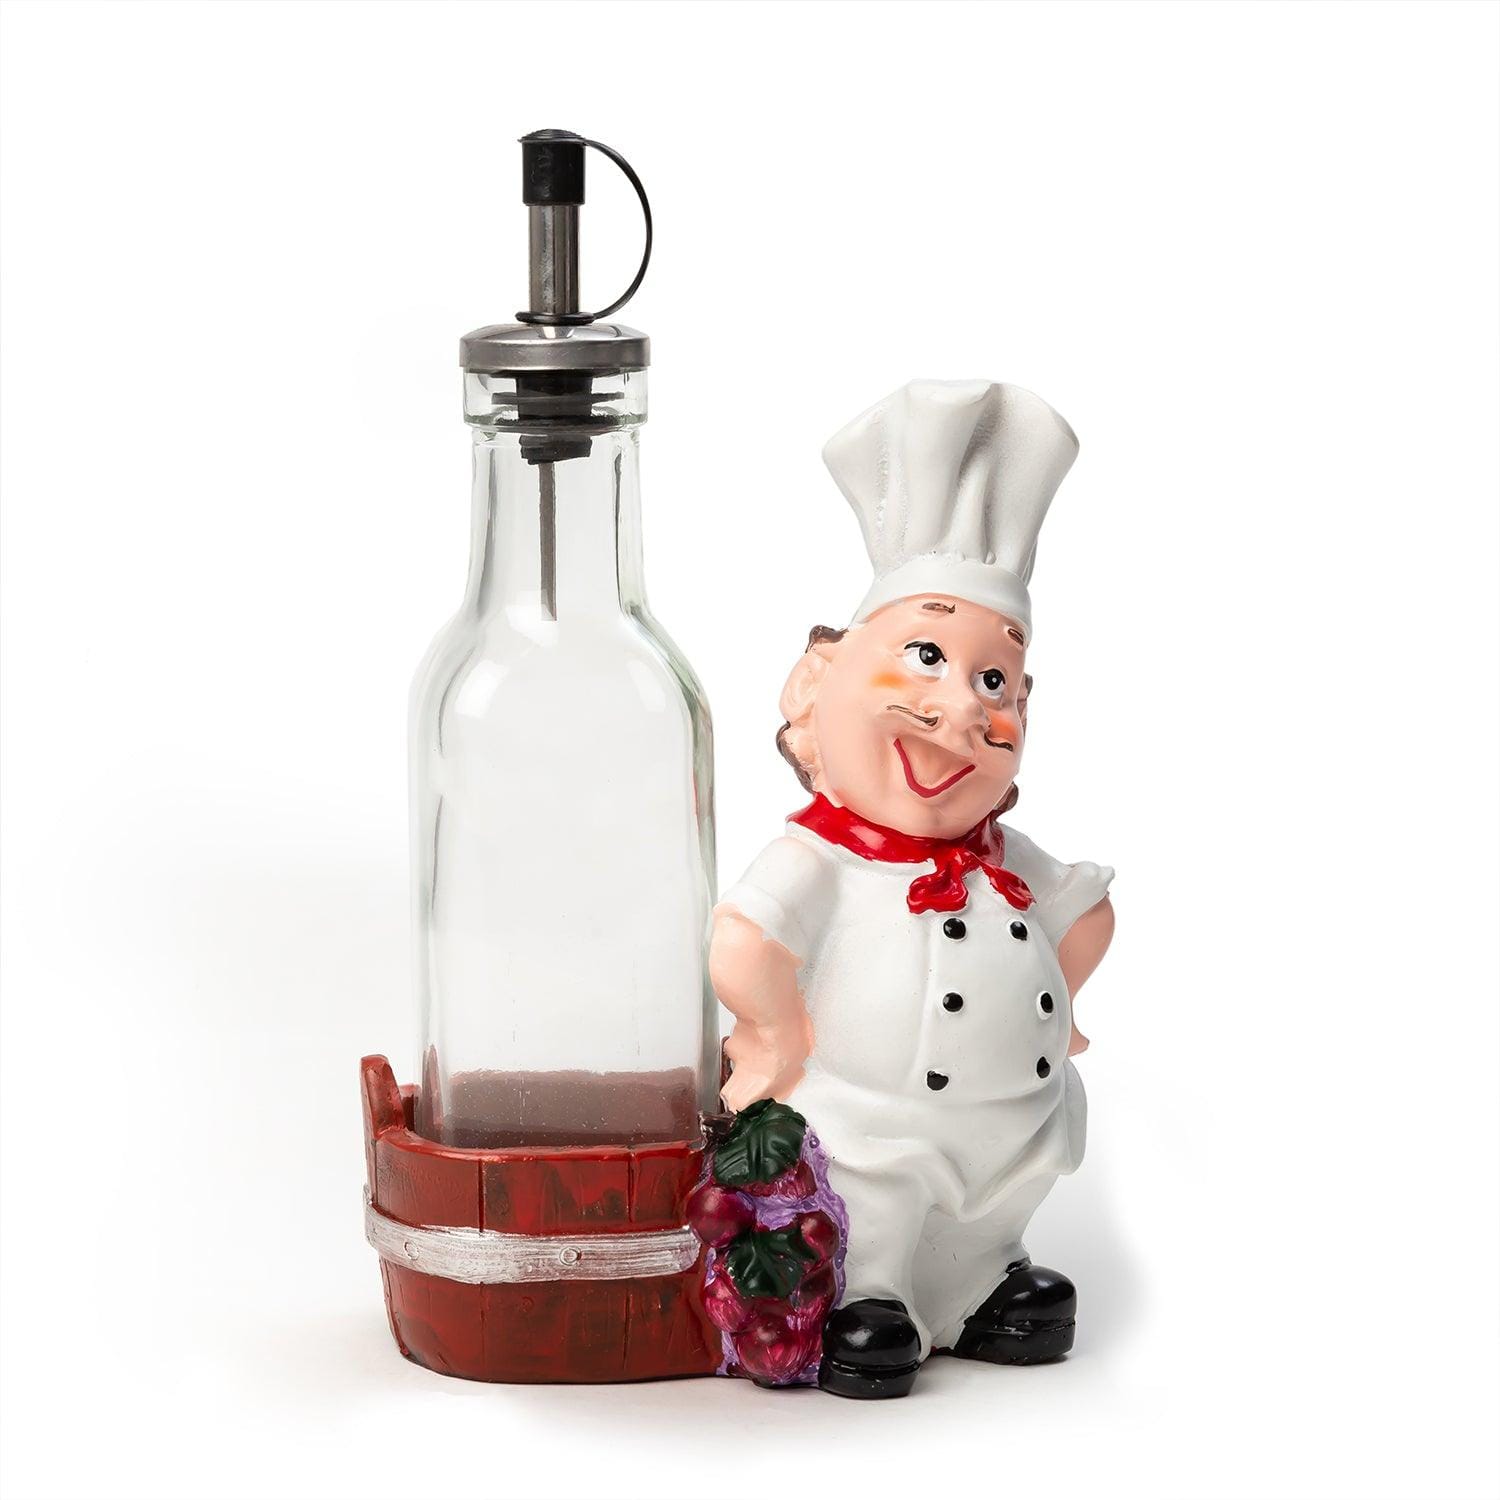 Foodie Chef Figurine Resin Oil & Vinegar Bottles Holder in Light Brown Basket Set